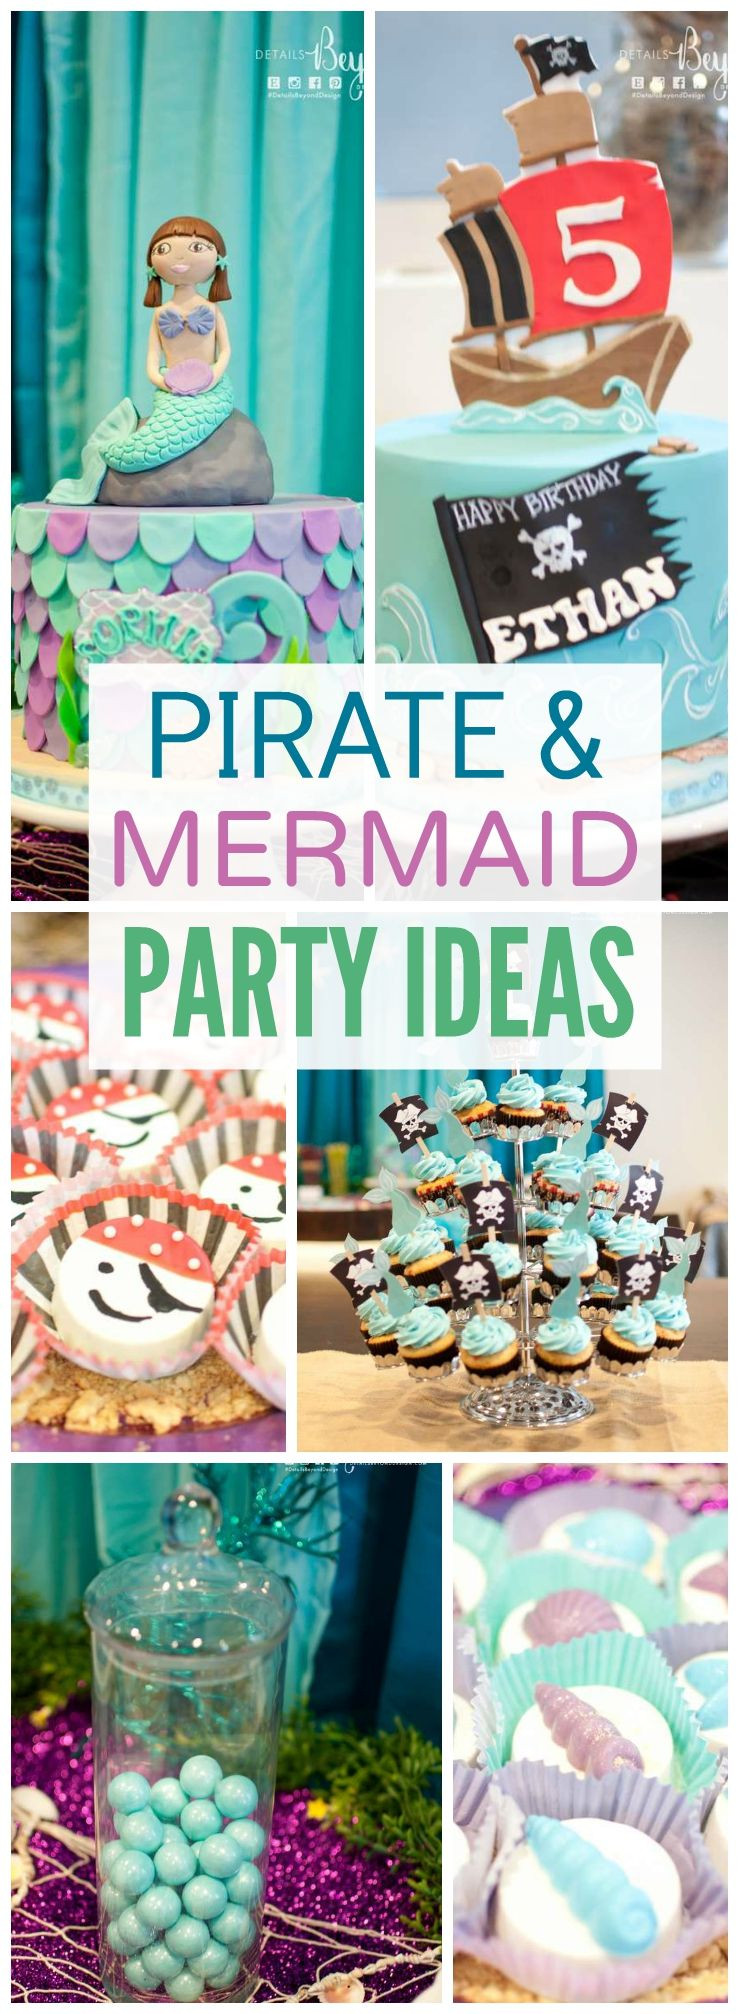 Boy Girl Birthday Party Ideas
 Pirate & Mermaid Under the Sea Birthday "Ethan